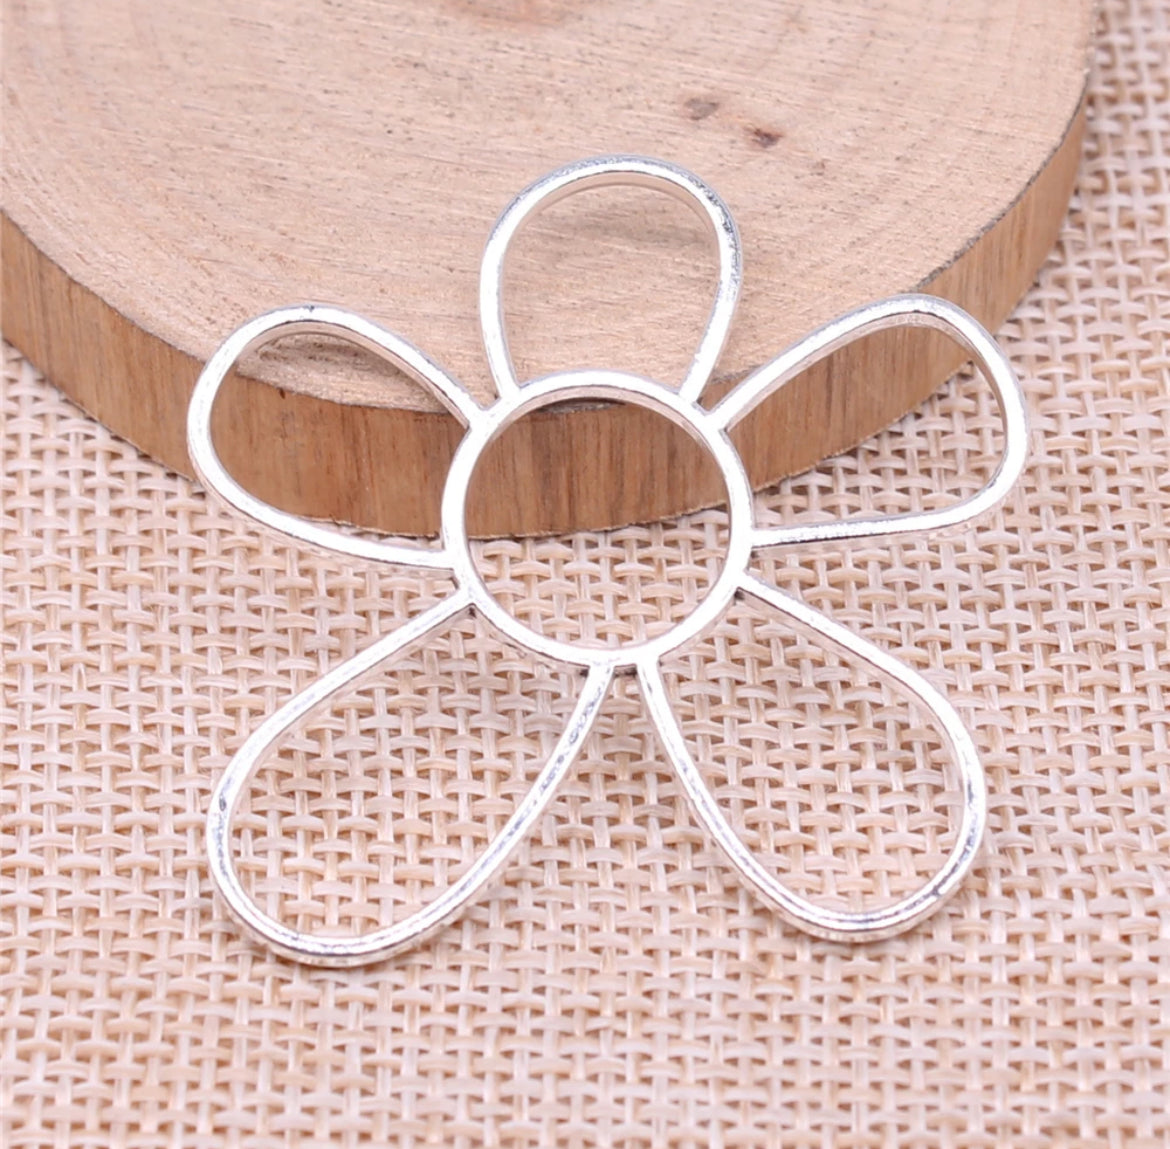 GSC18 - Flower Connector - ClartStudios - Polymer clay Jewellery